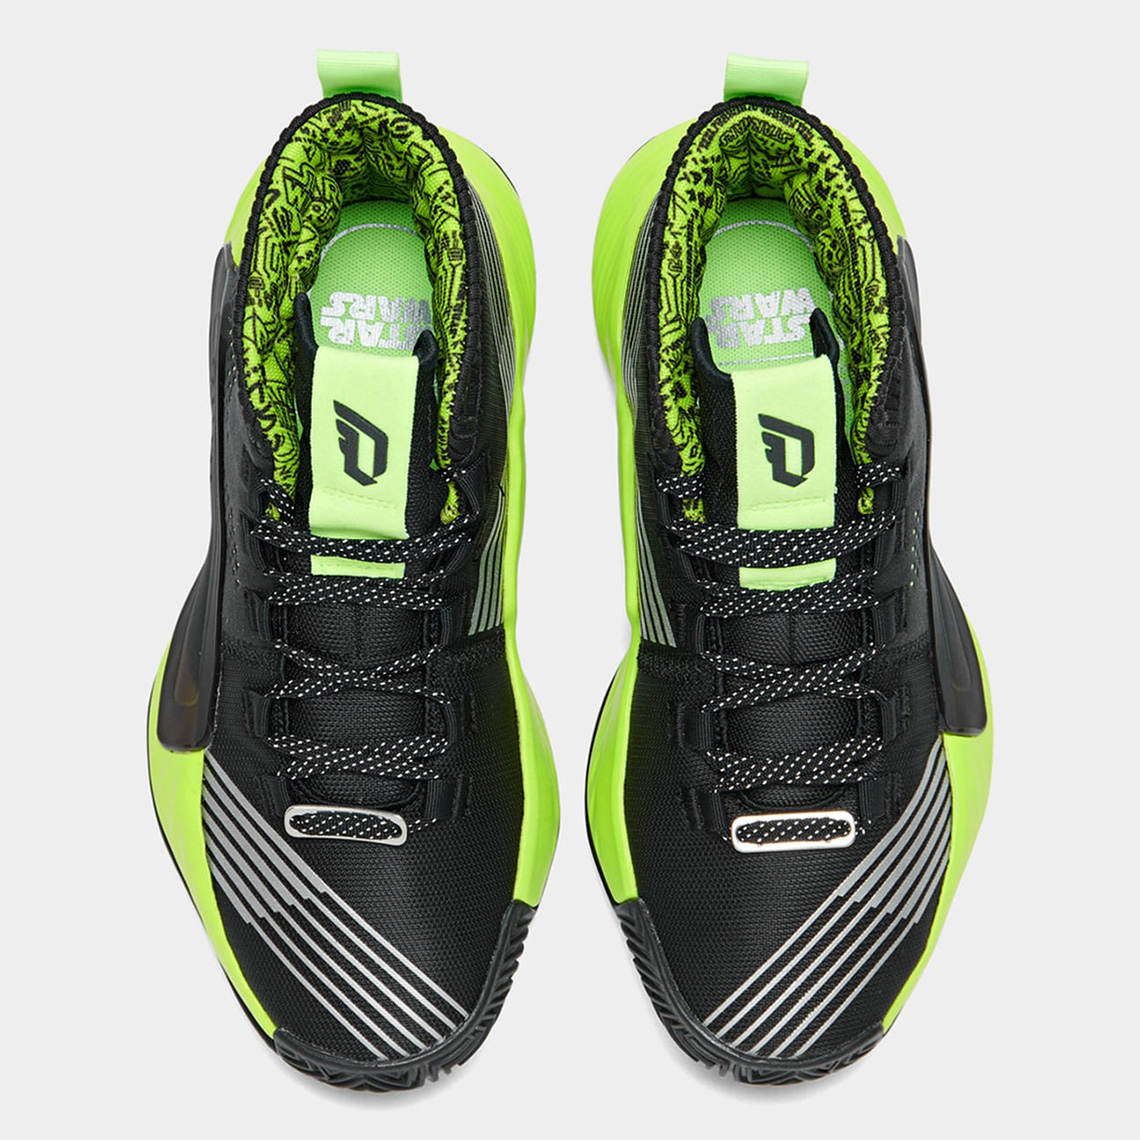 adidas dame 5 star wars lightsaber green shoes